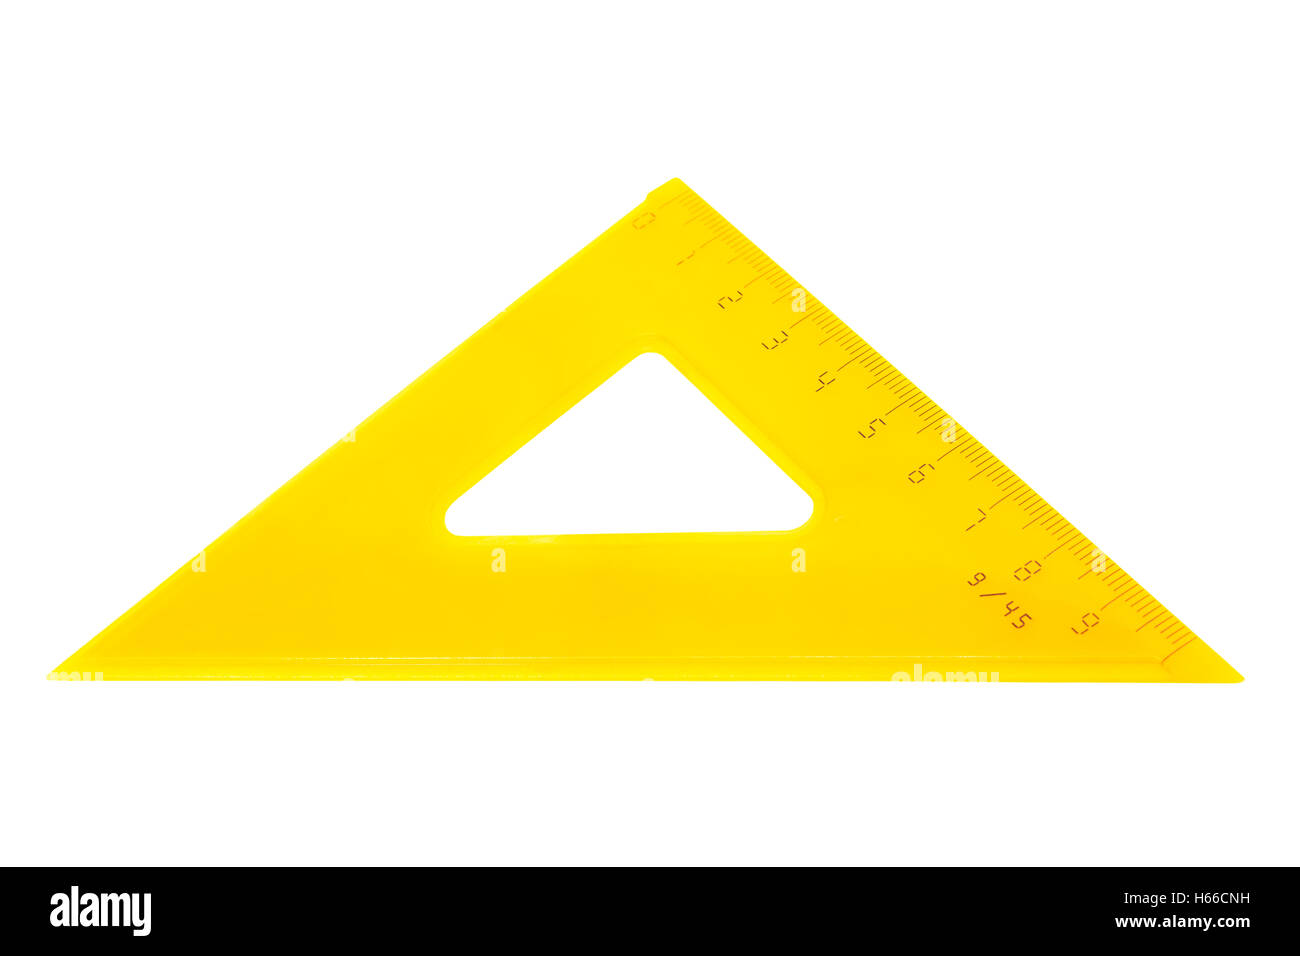 modern yellow triangle on a white background Stock Photo - Alamy